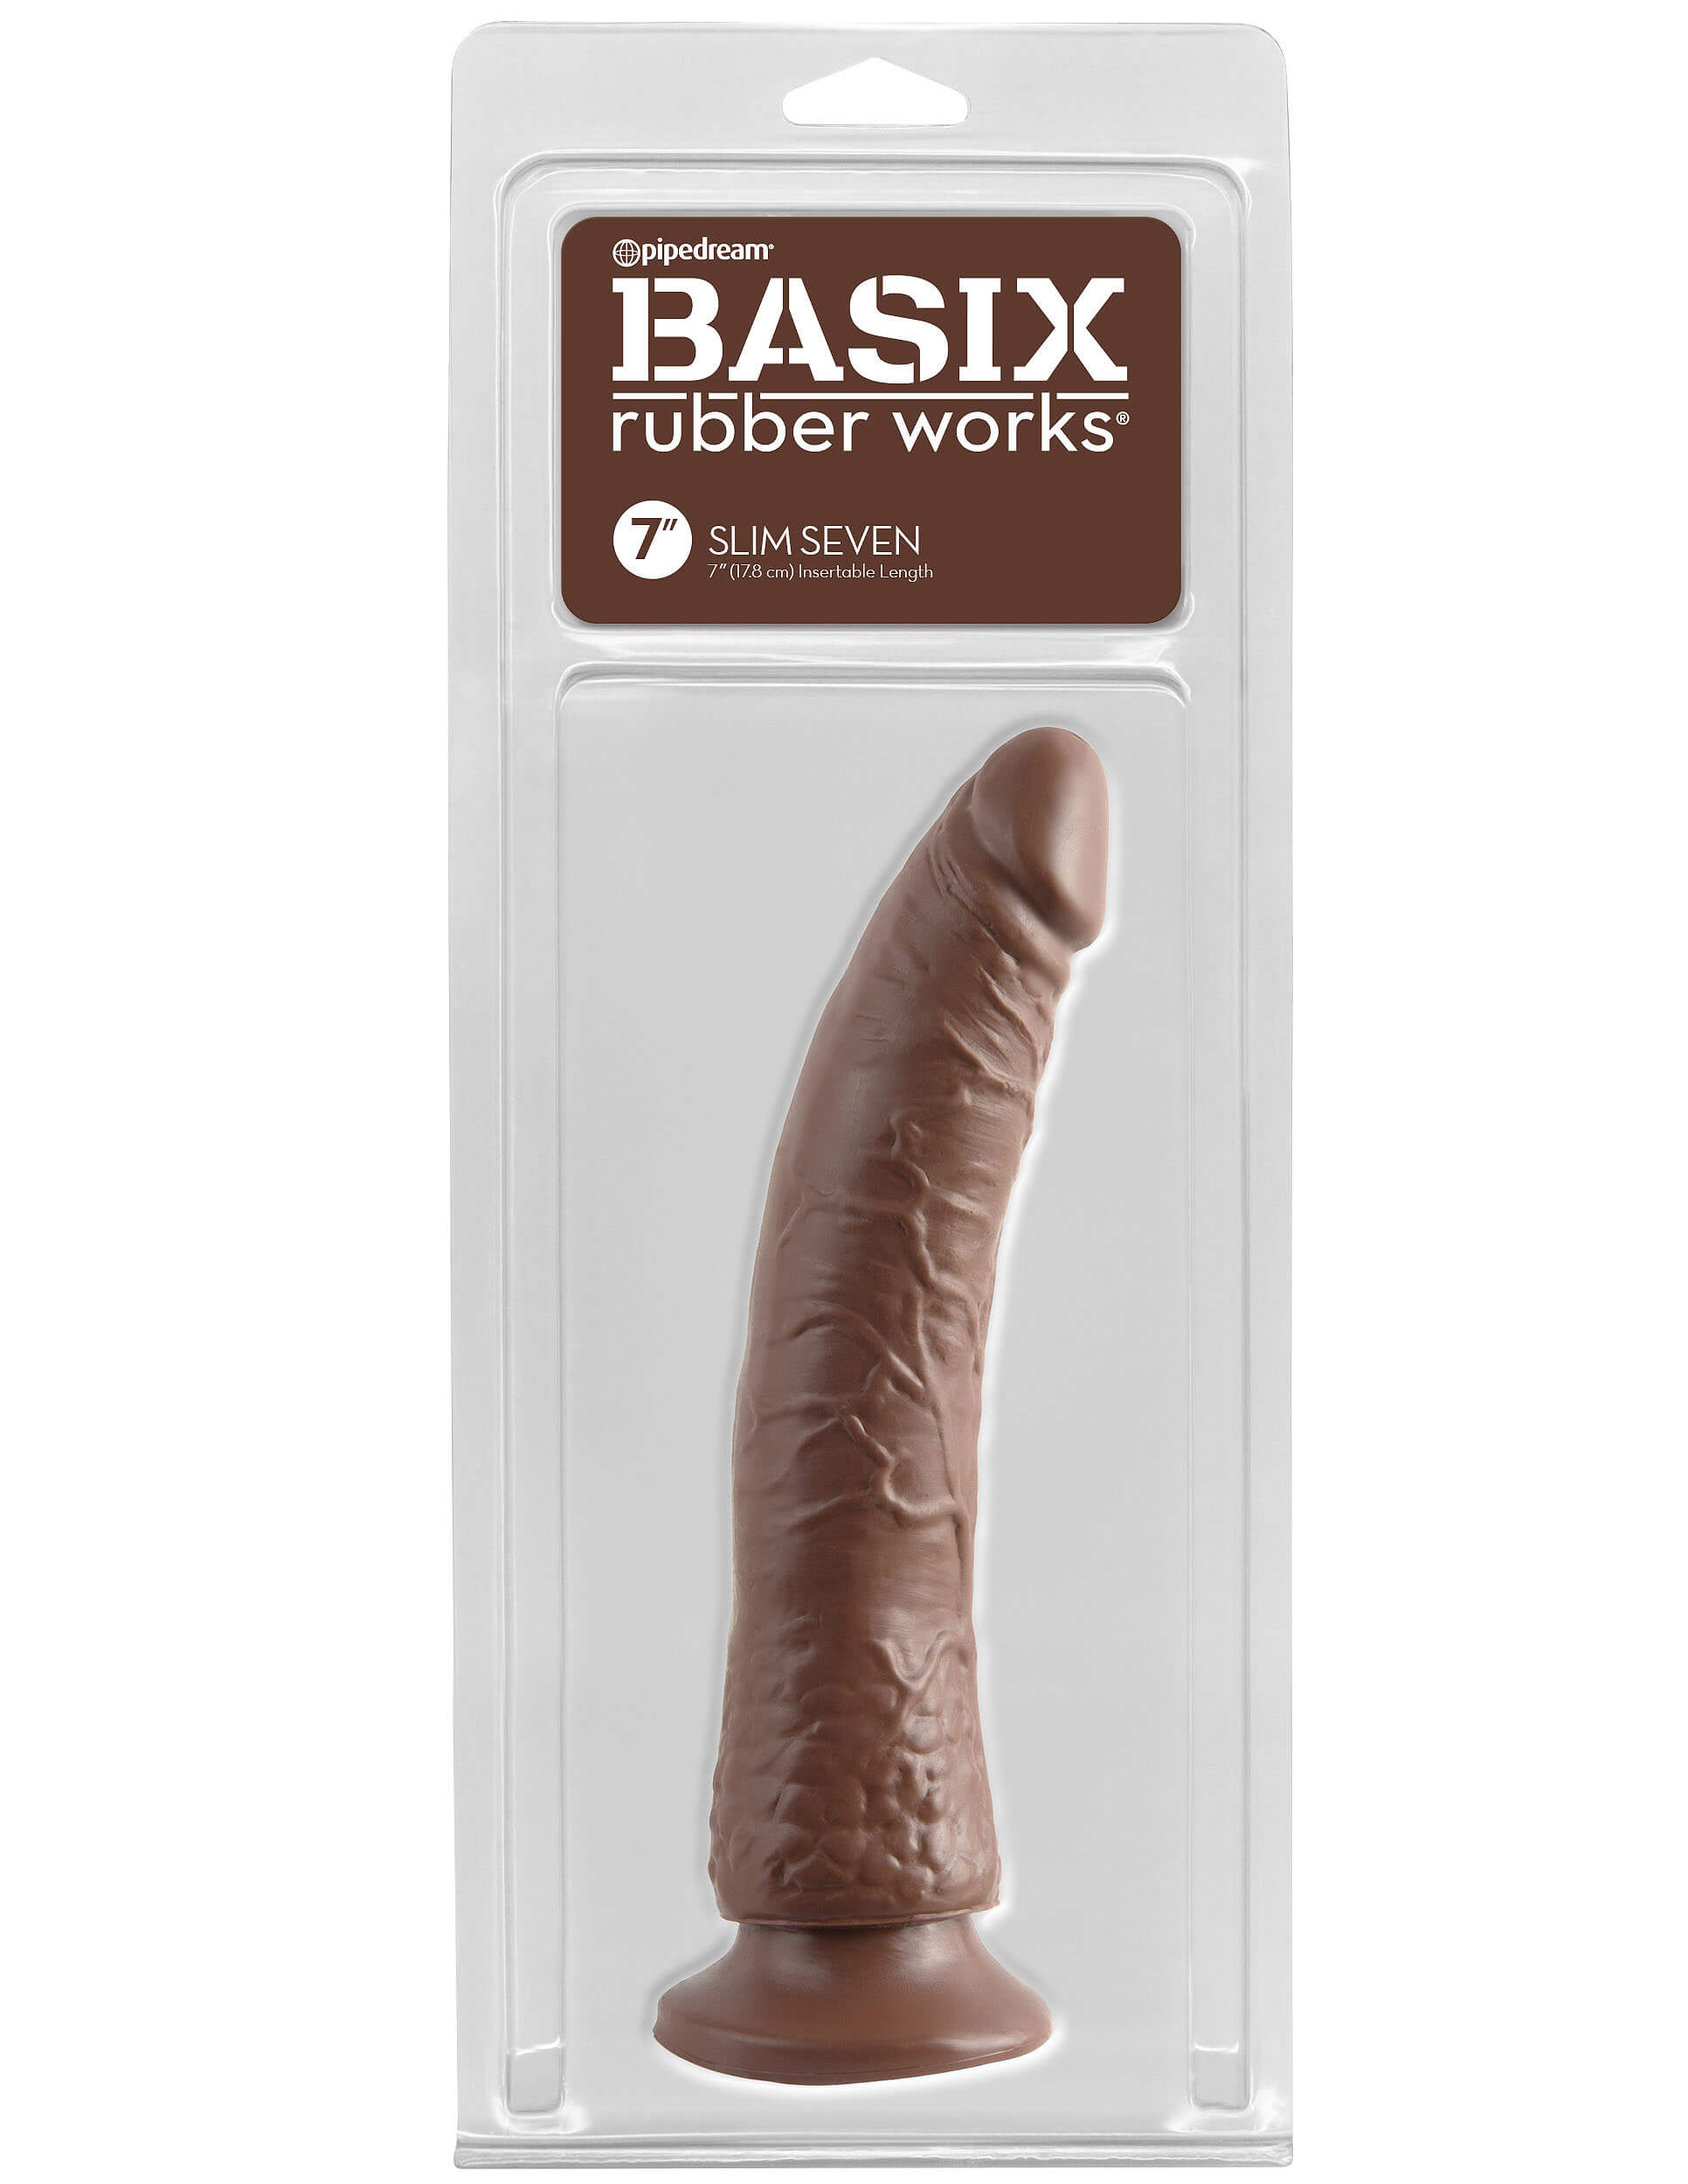 Basix Rubber Works Slim 7 brown